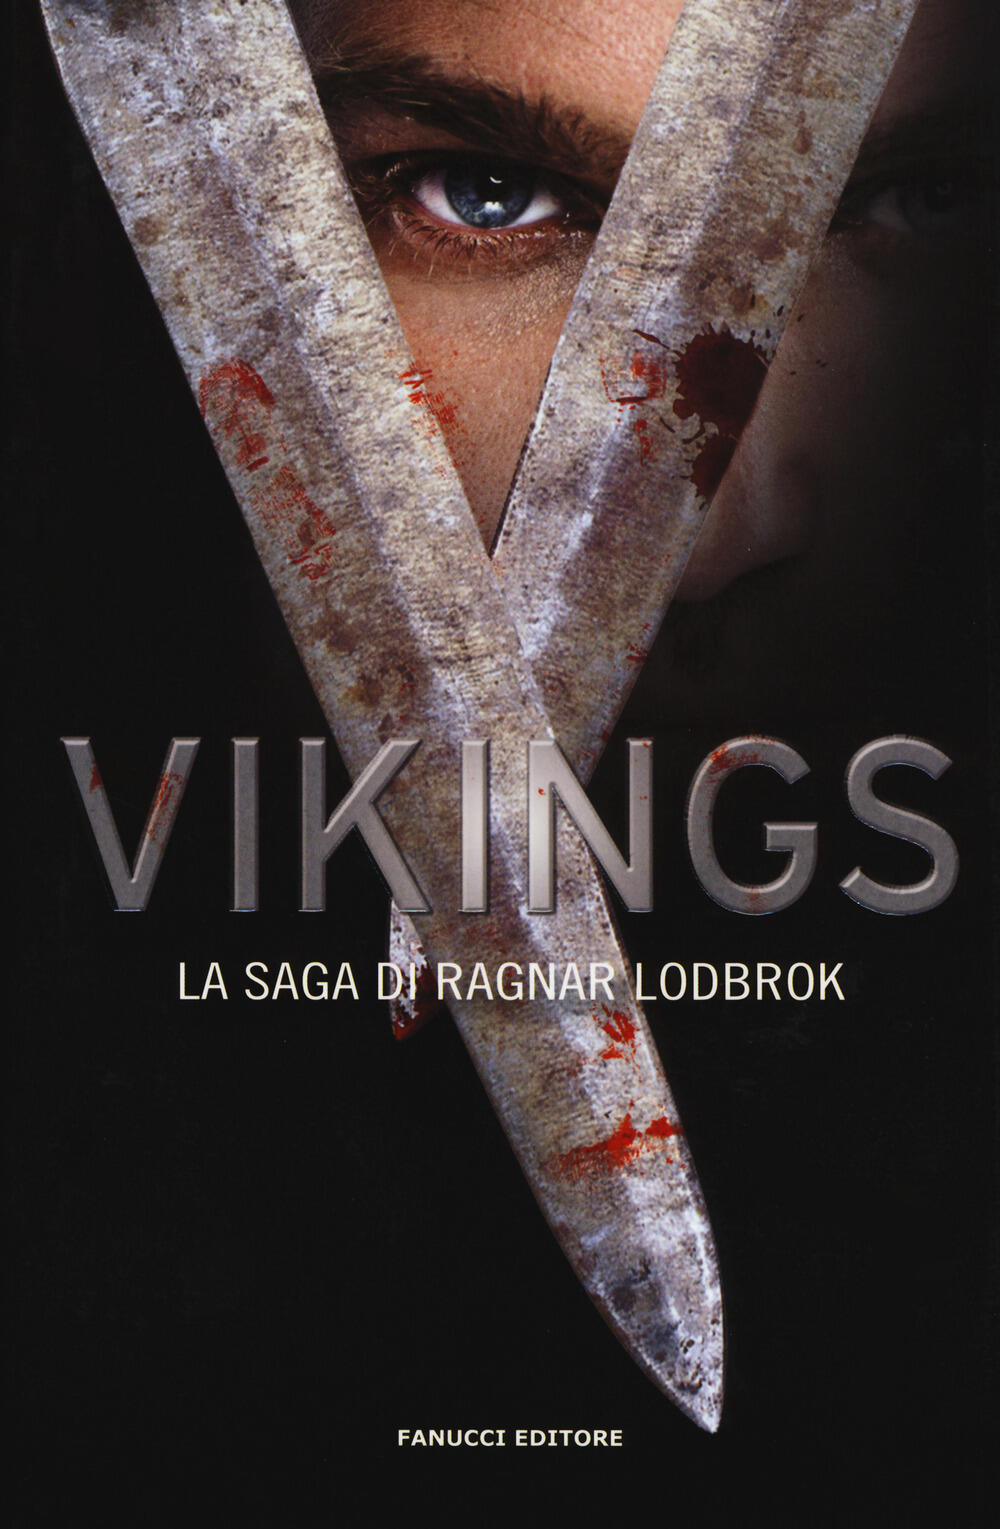 Risultati immagini per vikings la saga di ragnar lothbrok